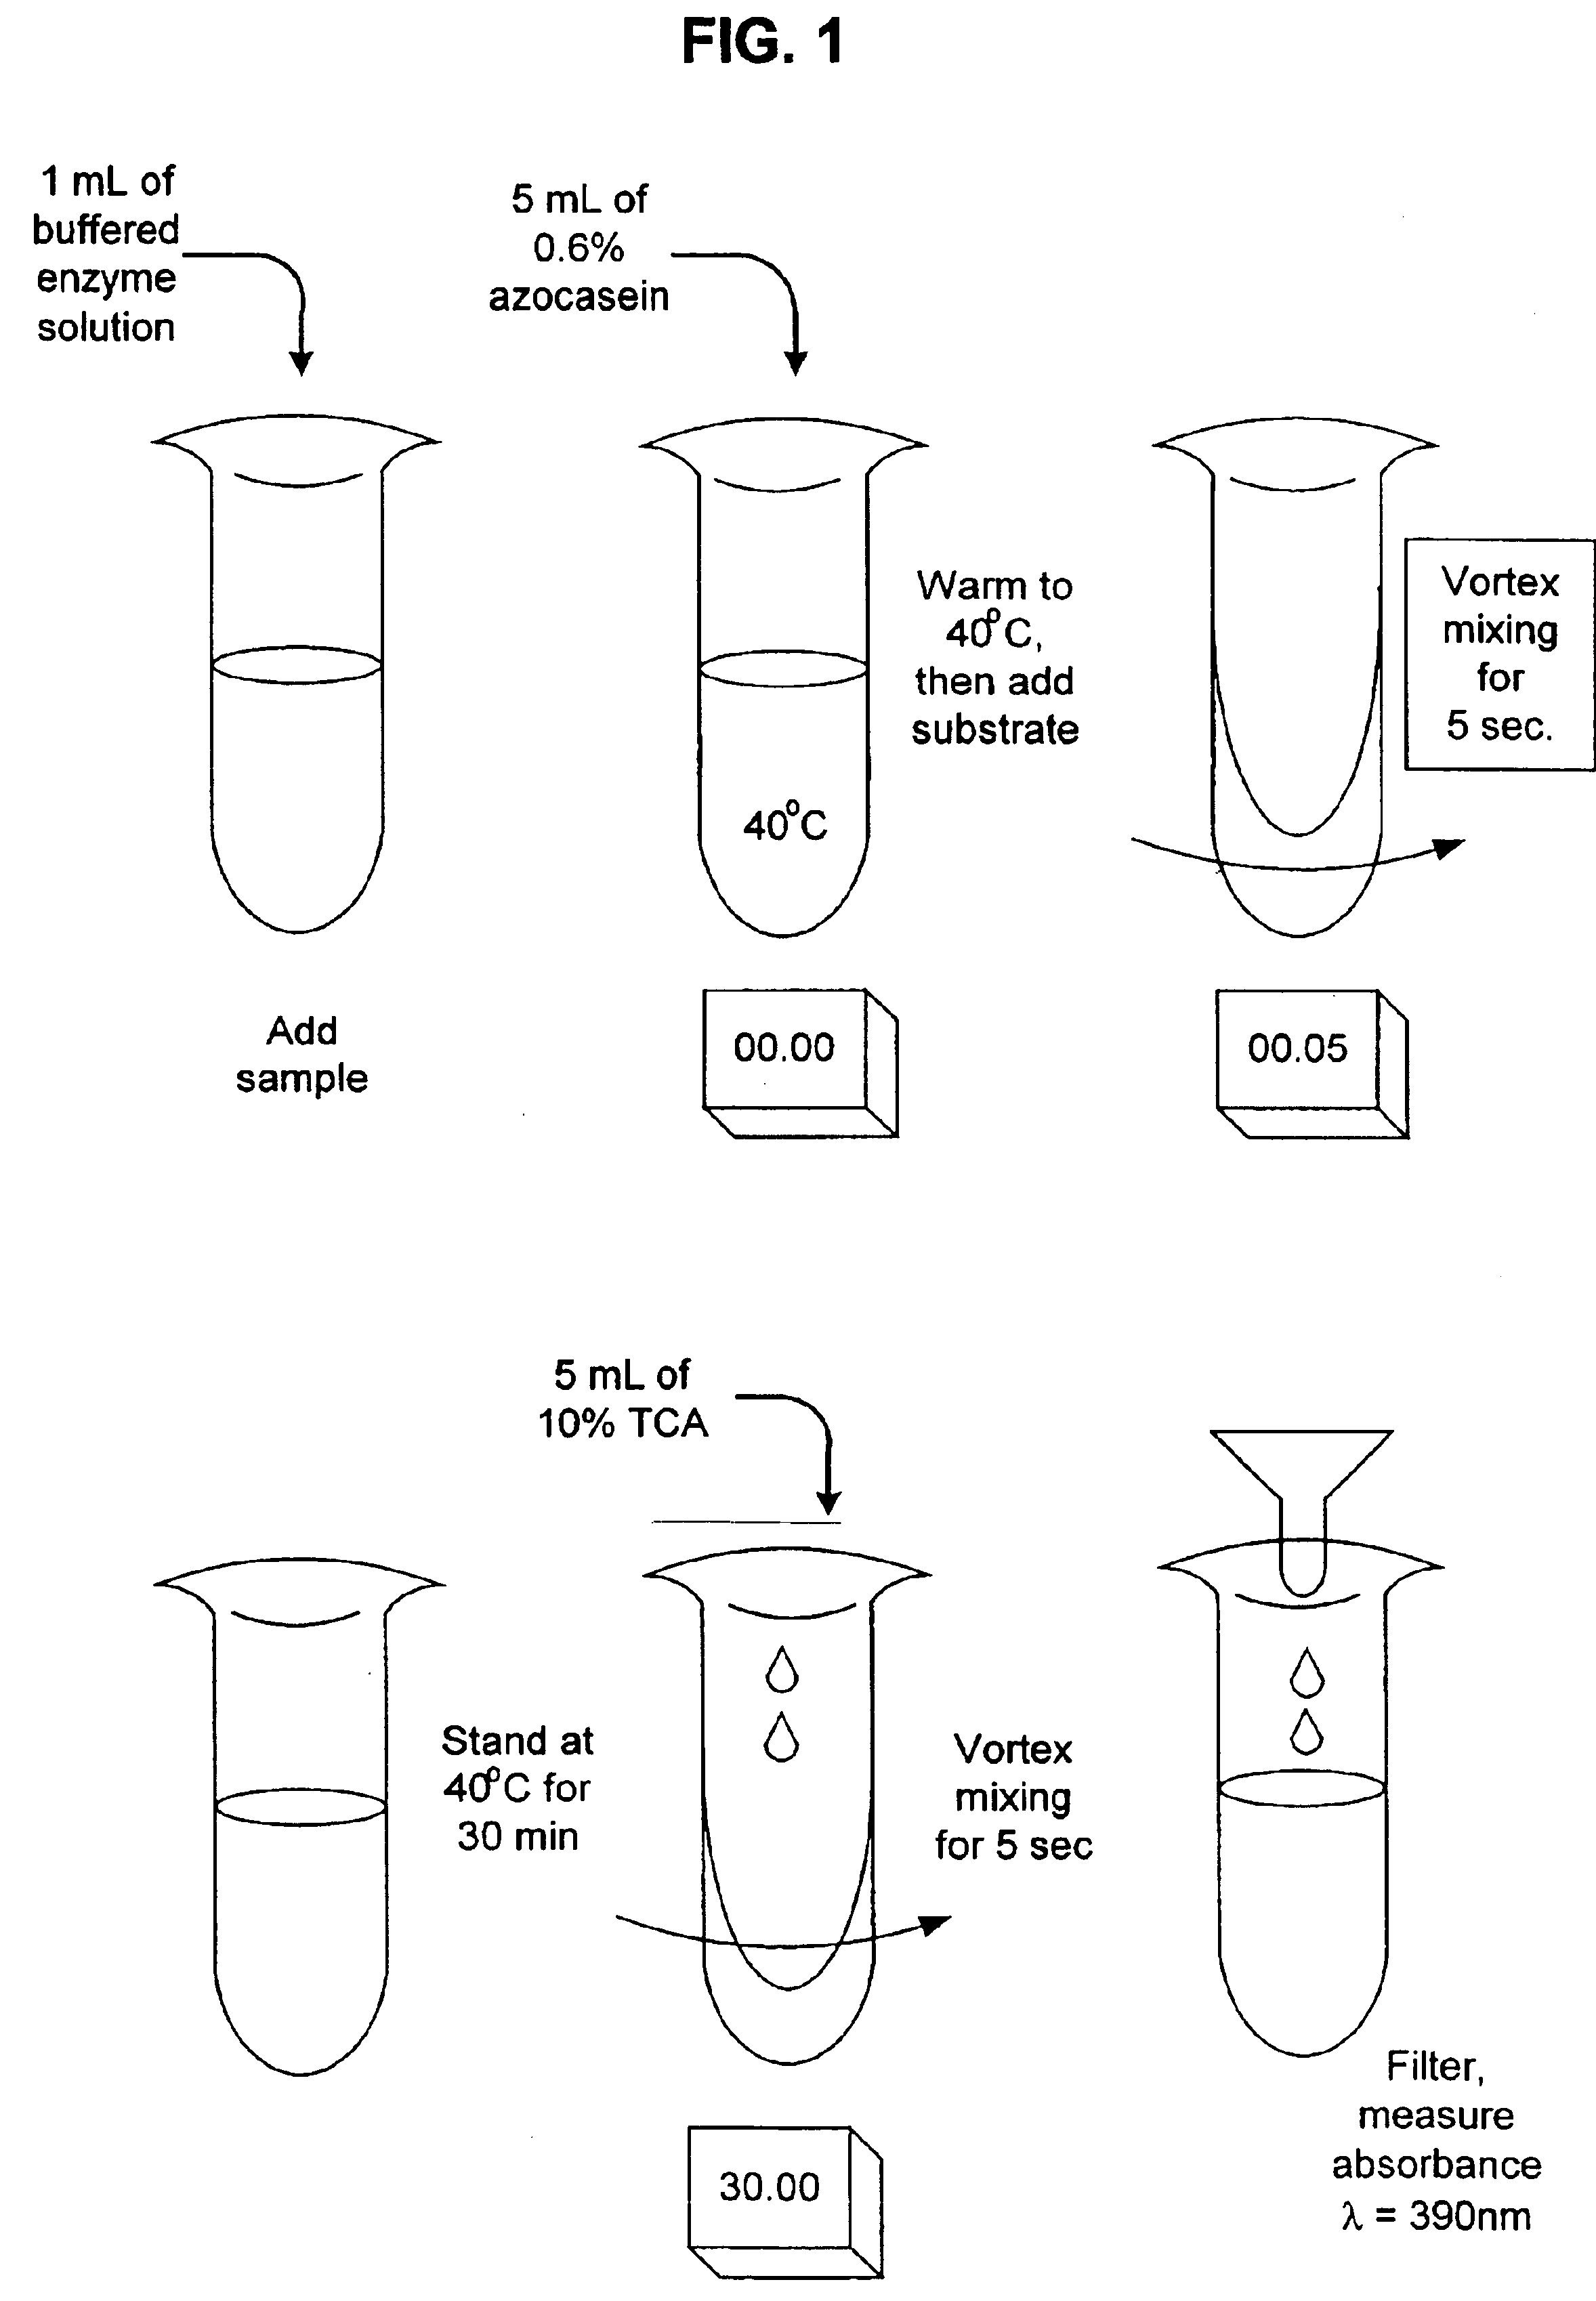 Surfactant system